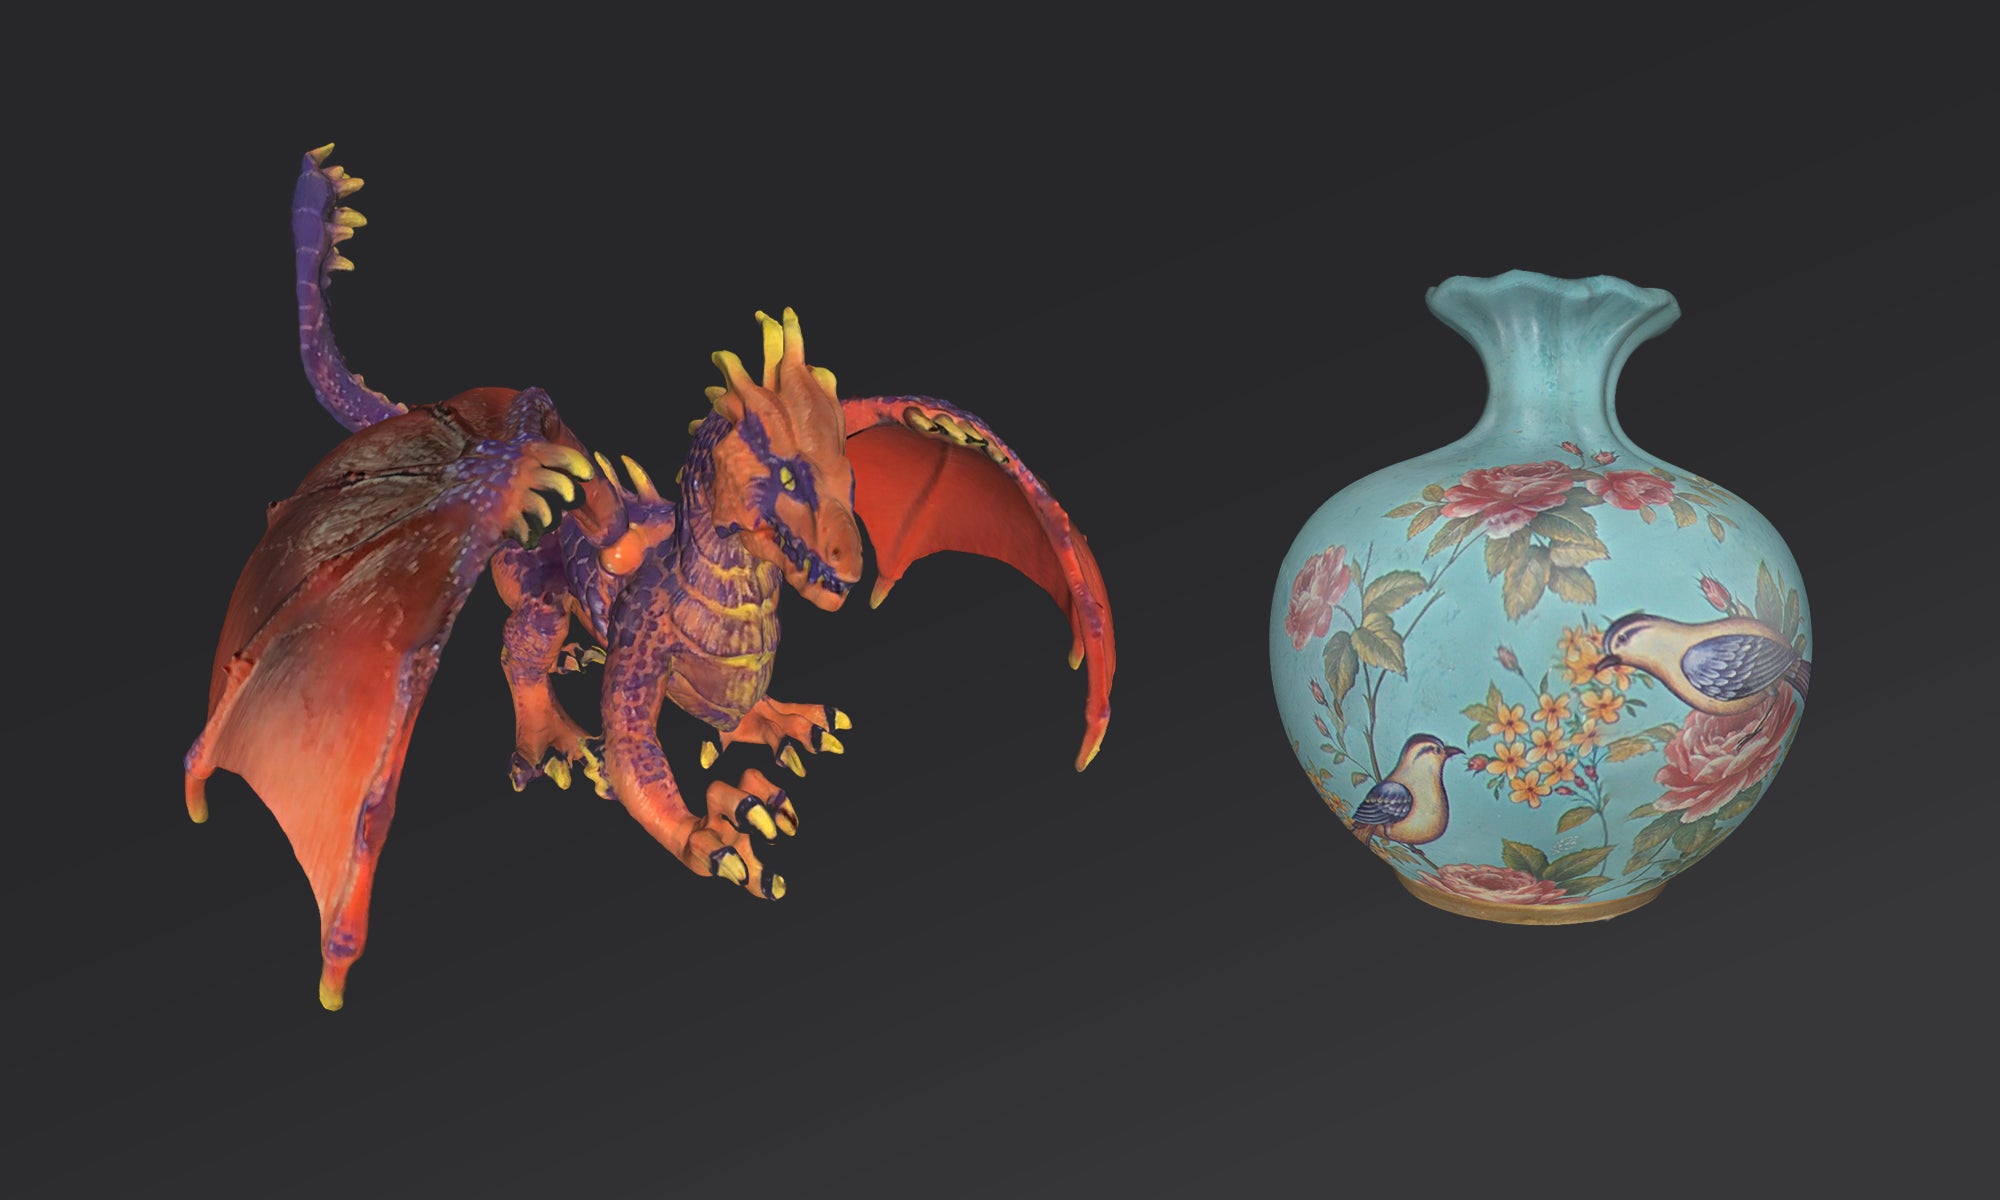 True Scan Restoration: Comparison of dragon model and vase after scanning with EINSTAR 3D scanner.